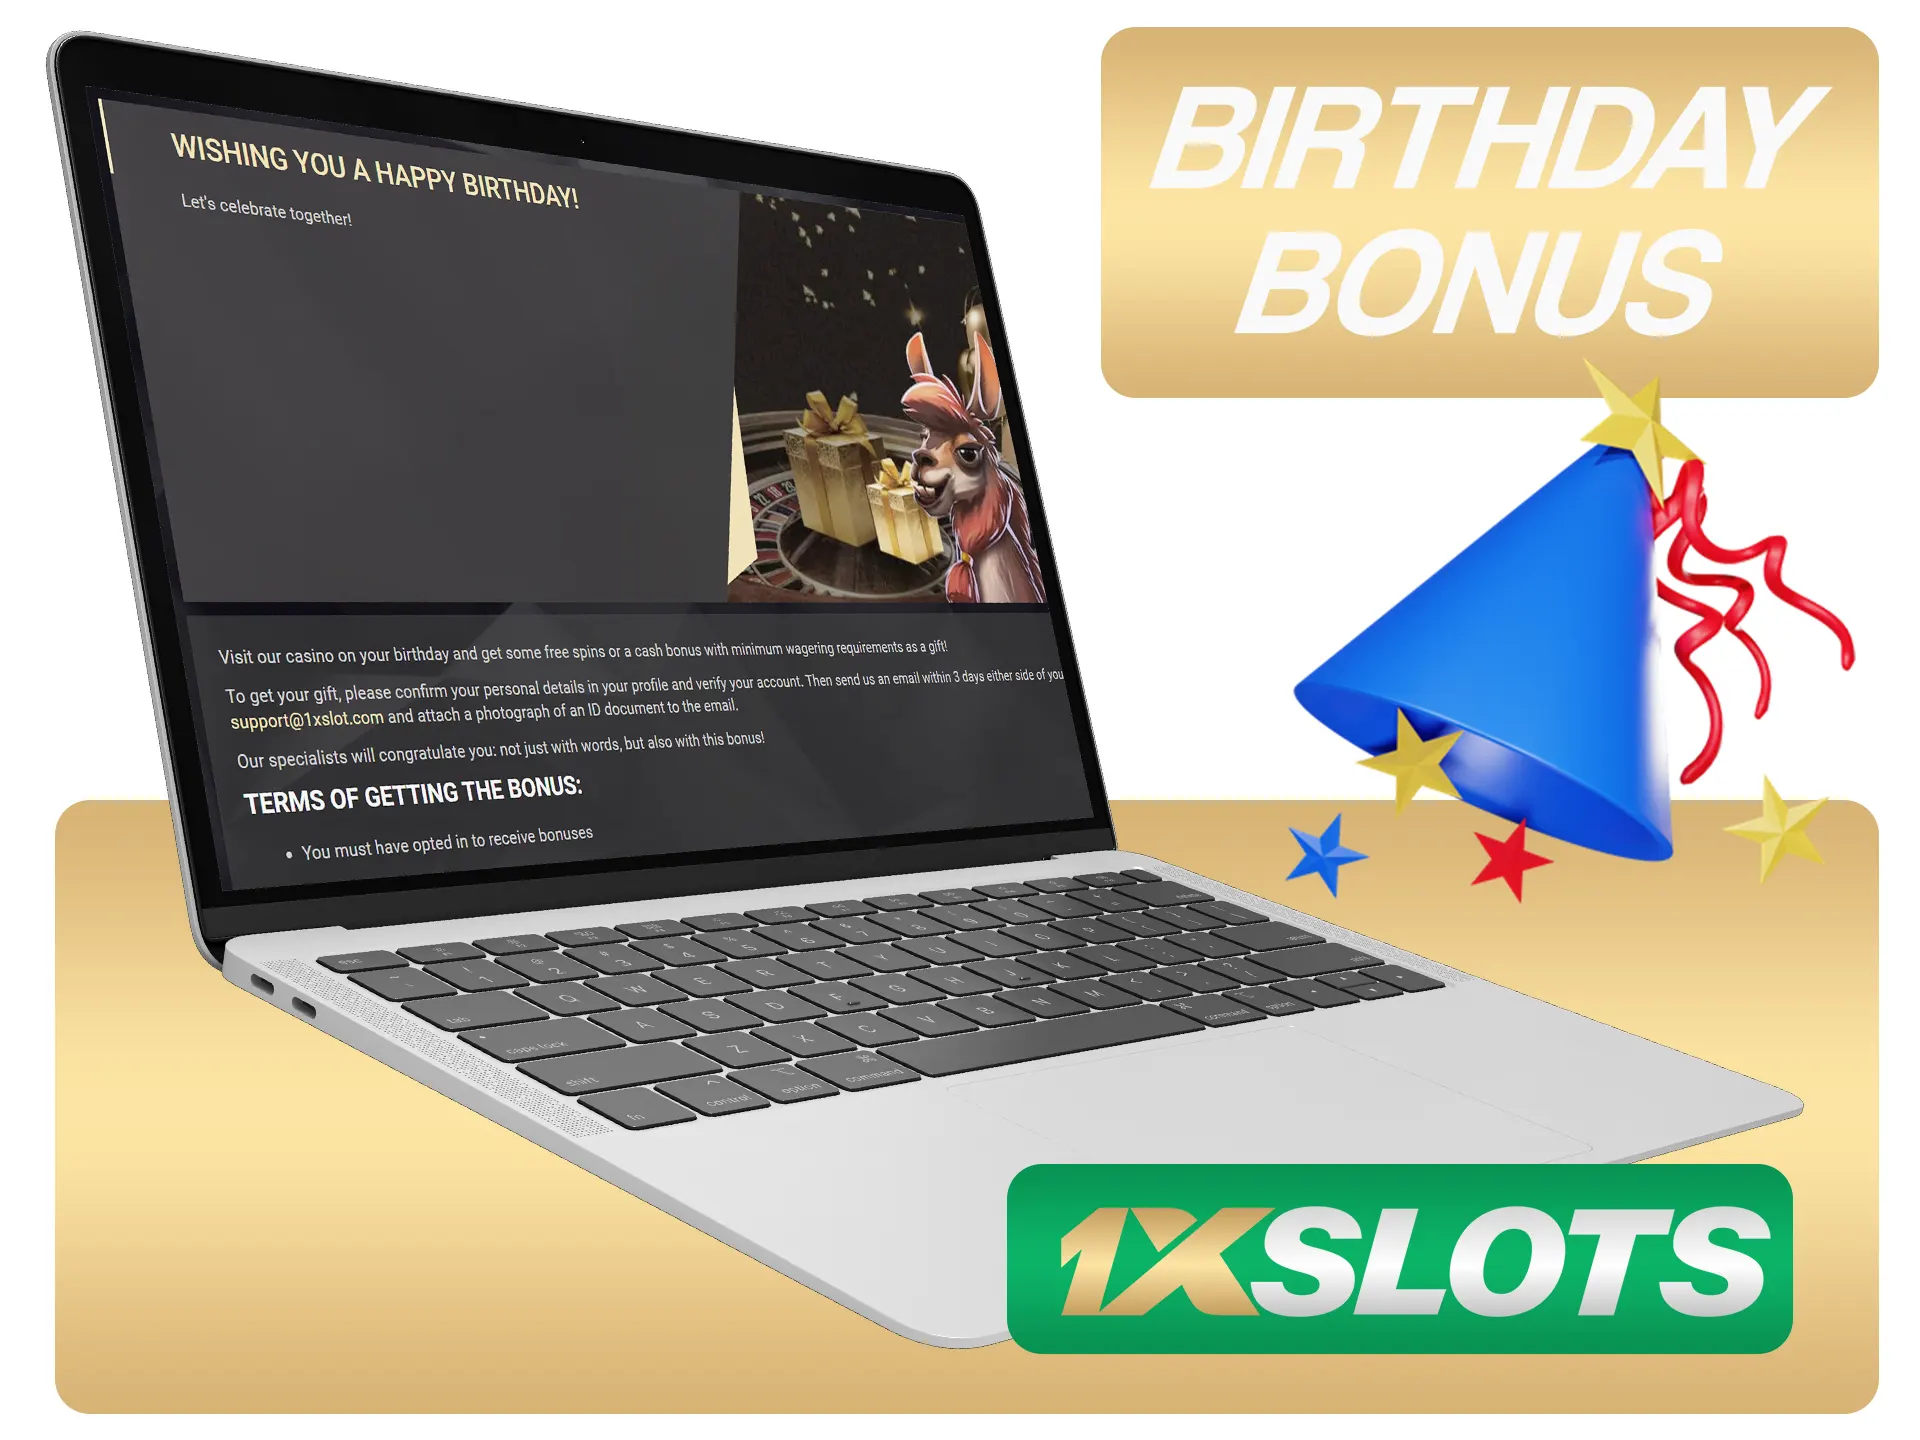 Get new 1xSlots bonus on your birthday.